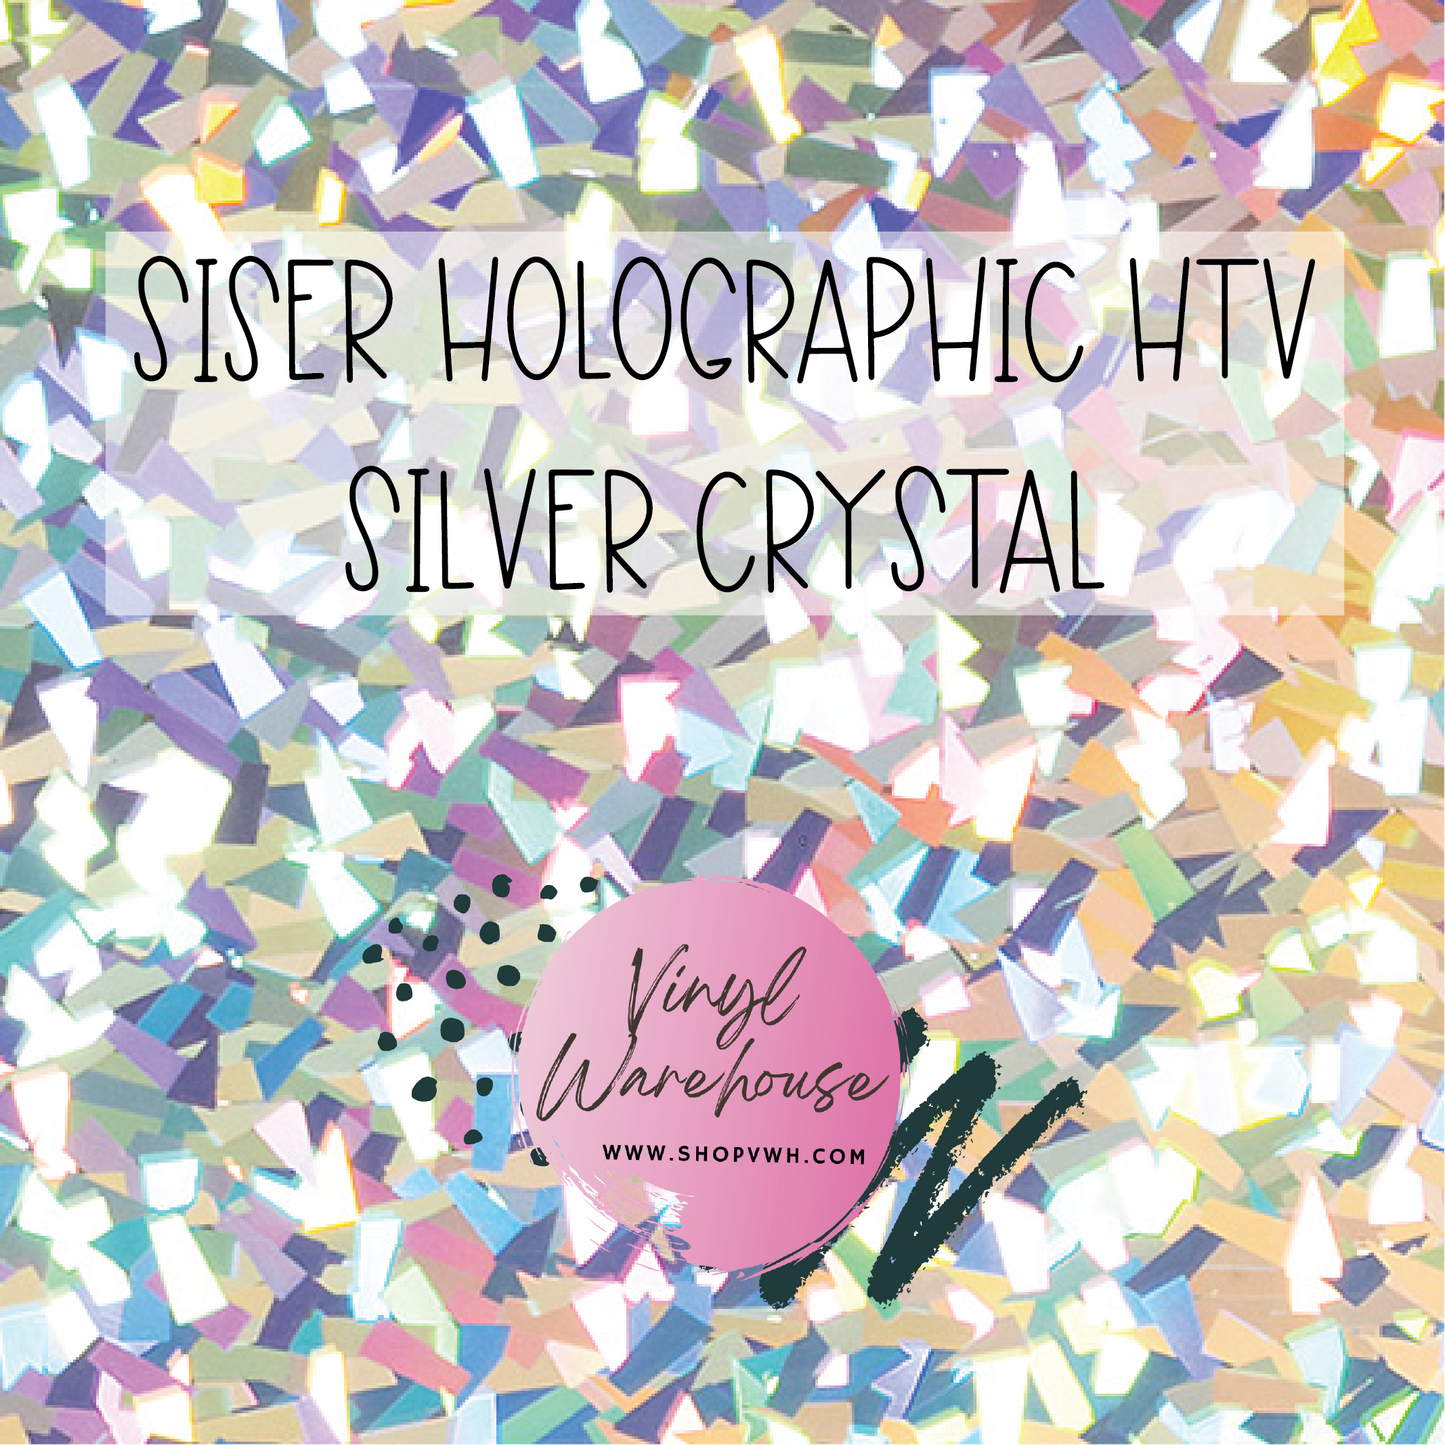 Siser Holographic HTV - Silver Crystal